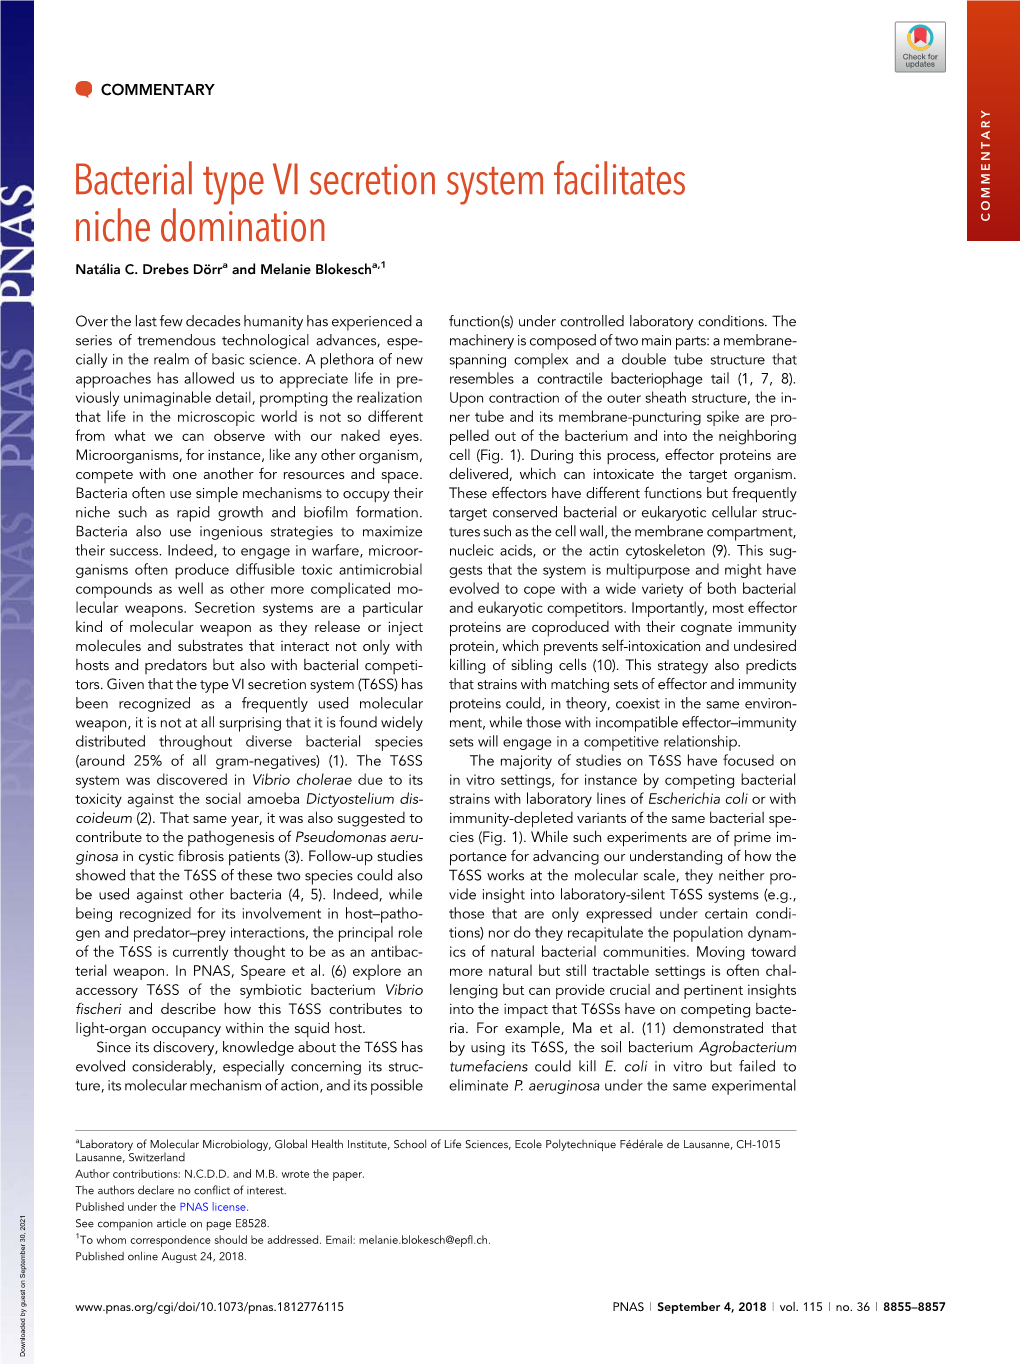 Bacterial Type VI Secretion System Facilitates Niche Domination